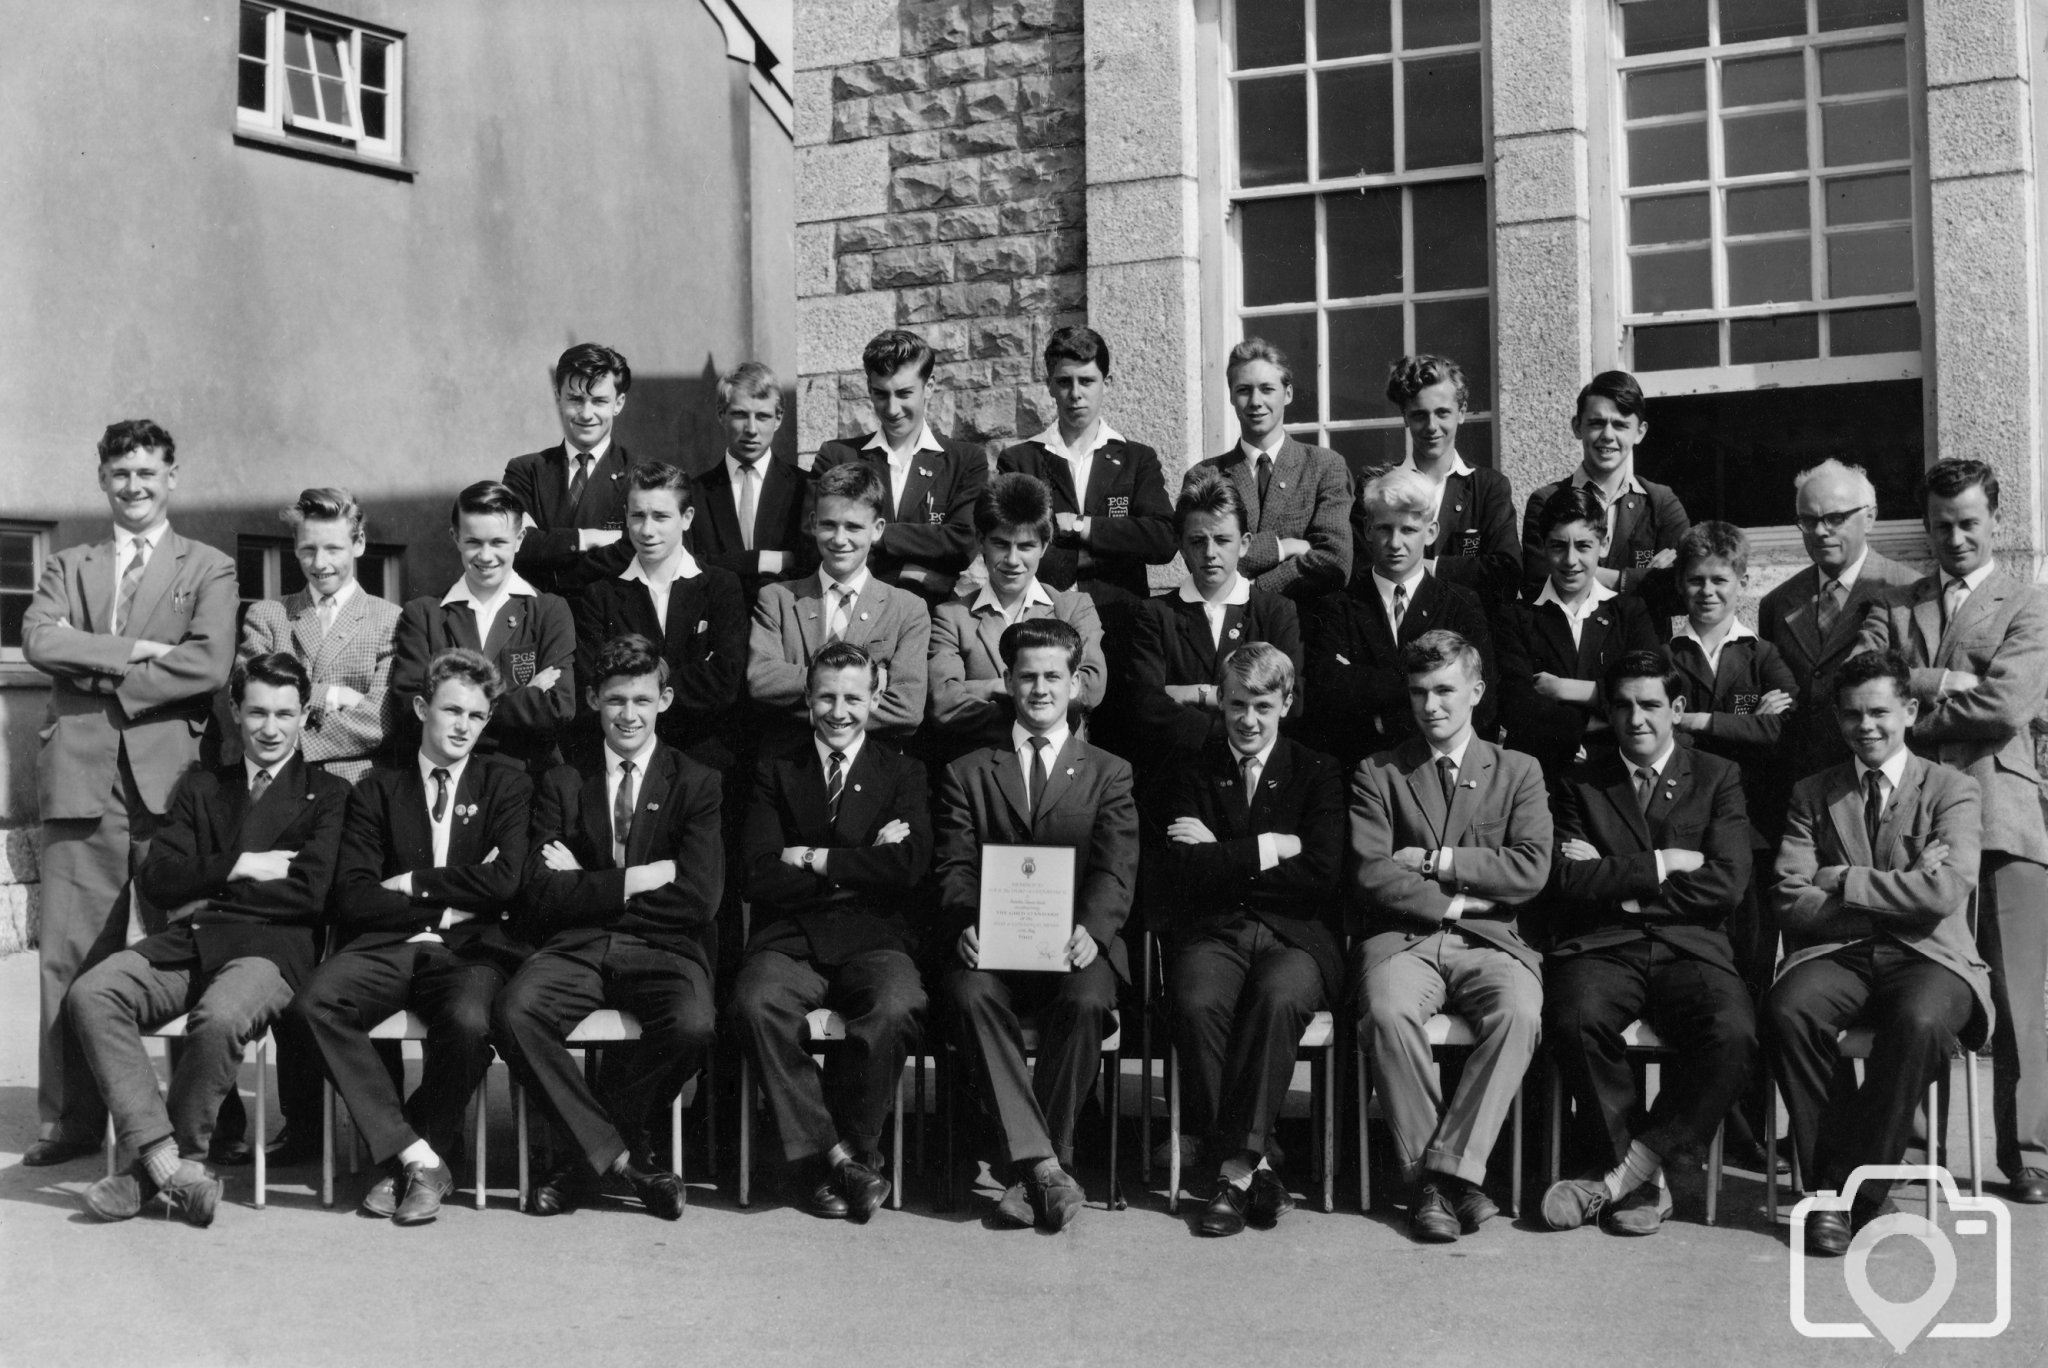 Duke of Edinburgh Award Winners 1961